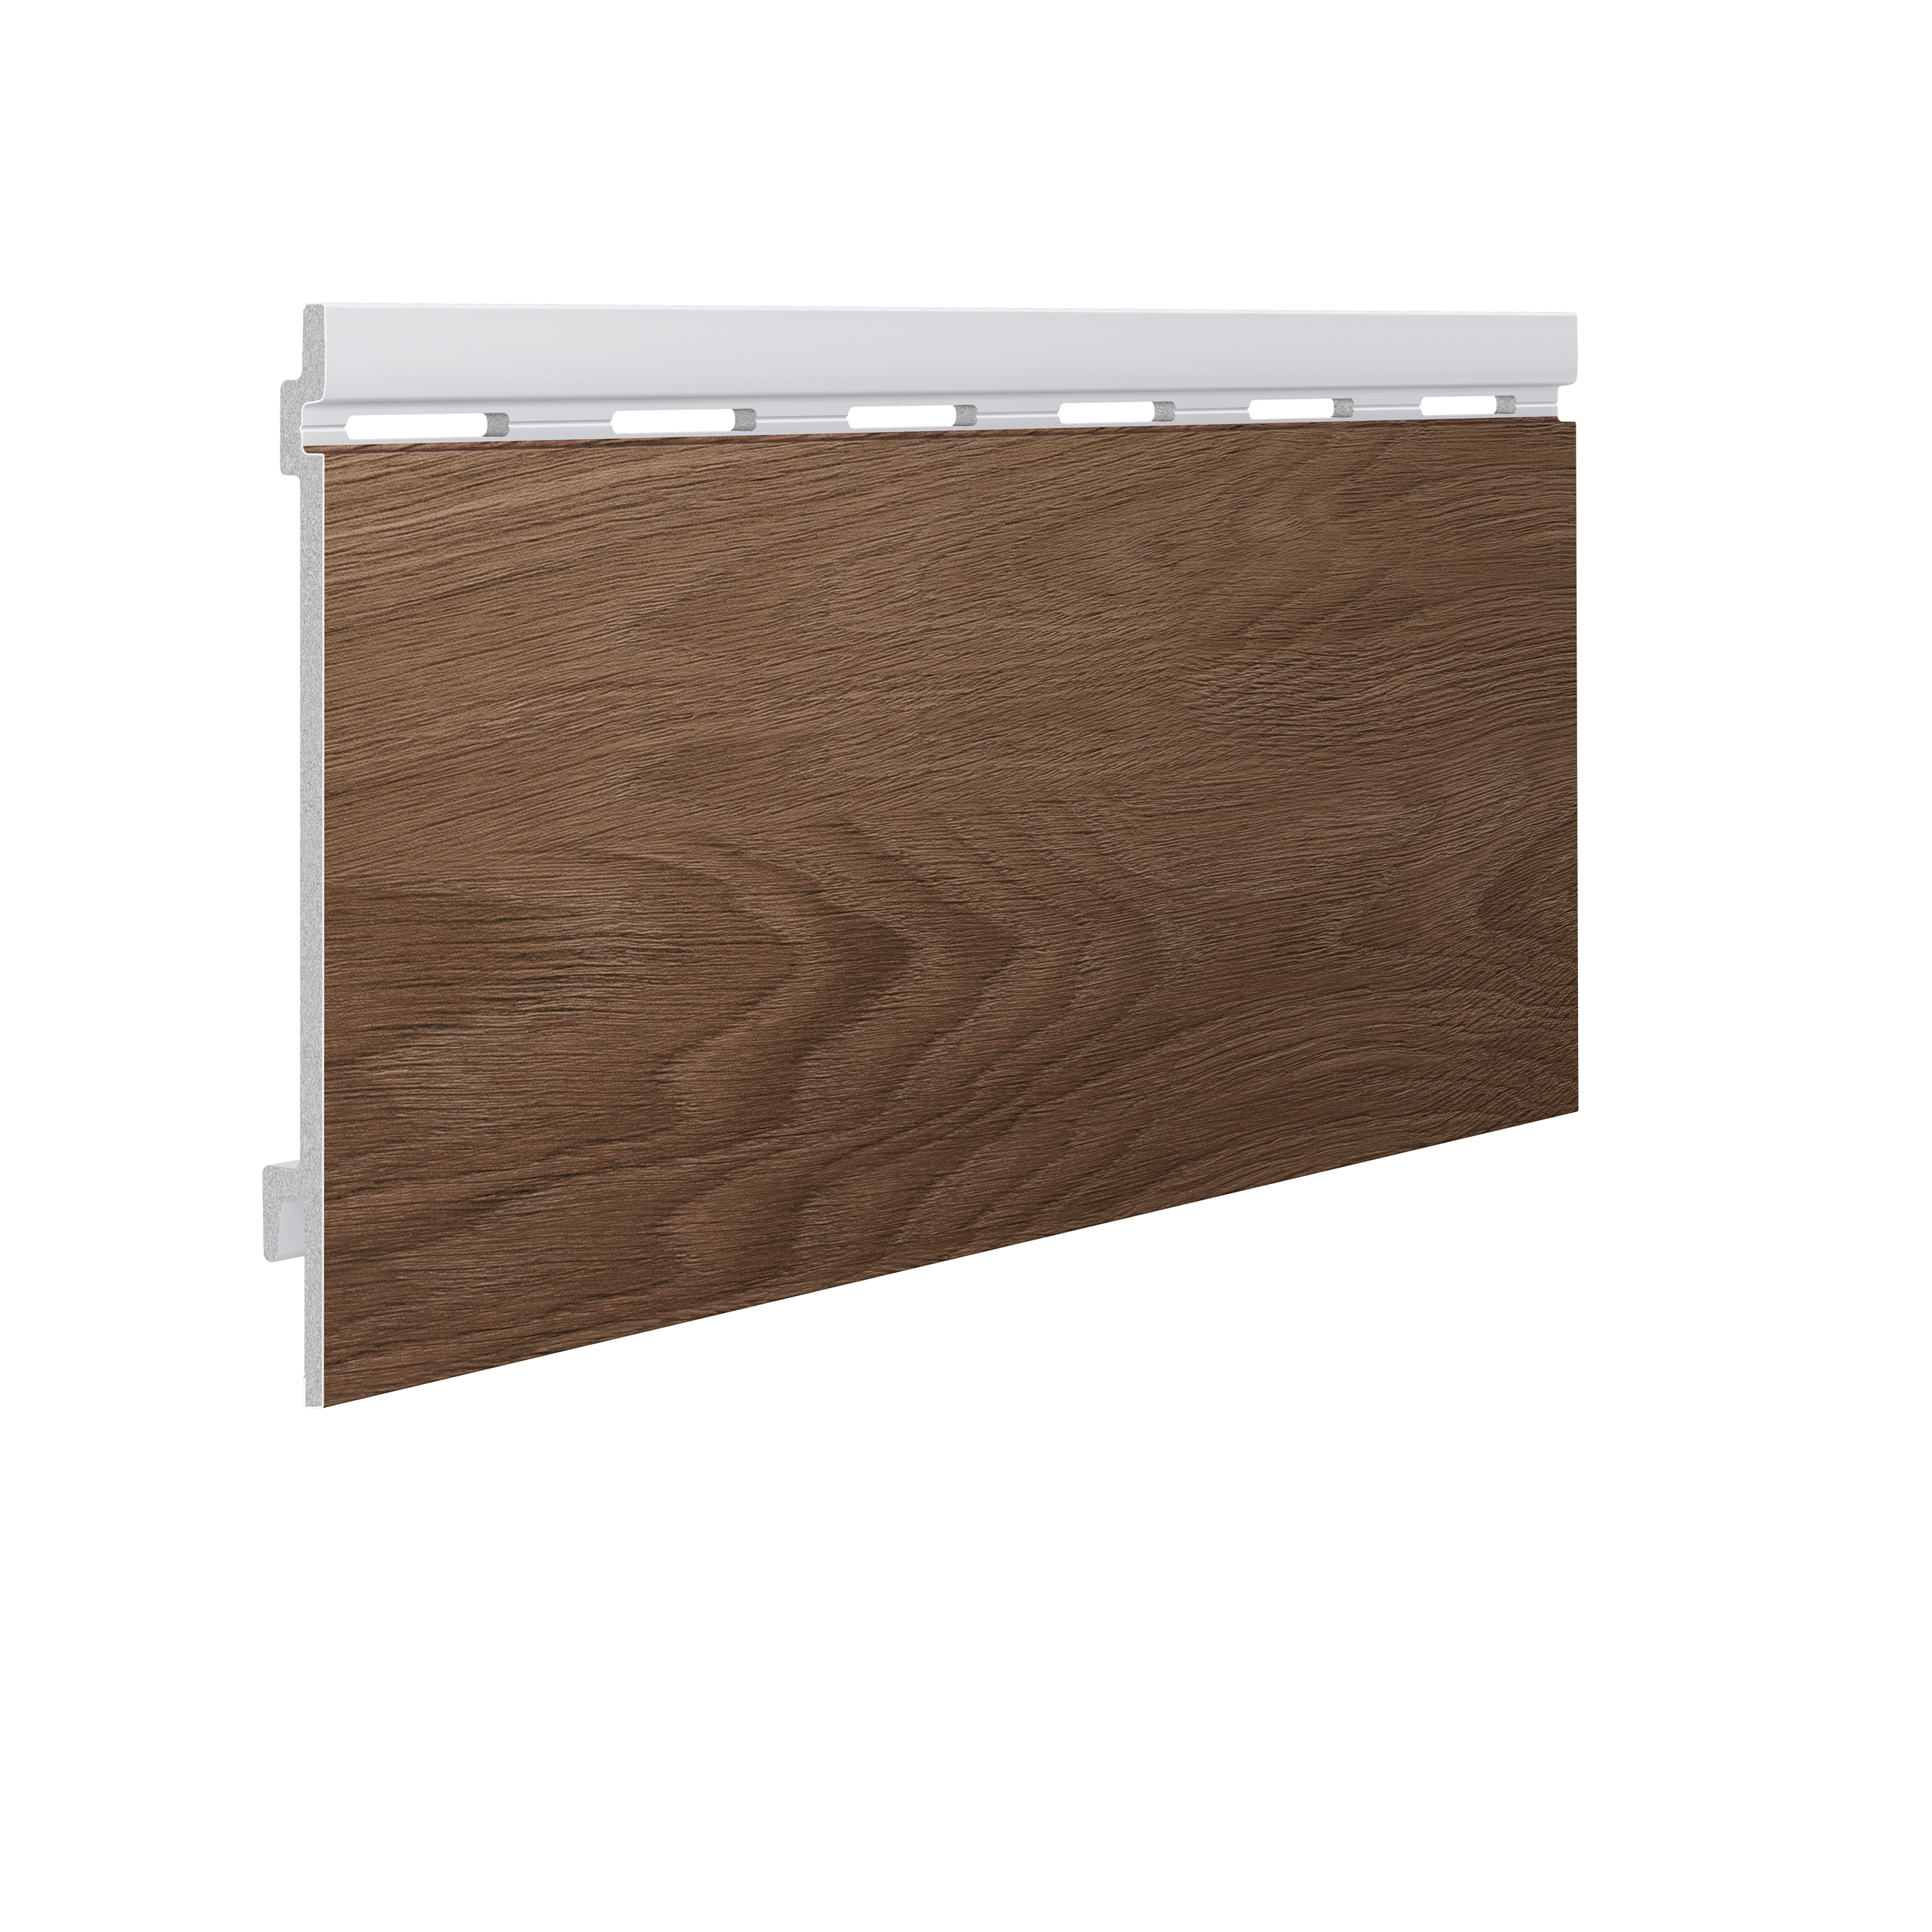 Facade cladding, Kerrafront, Wood Effect, Caramel Oak, single panel